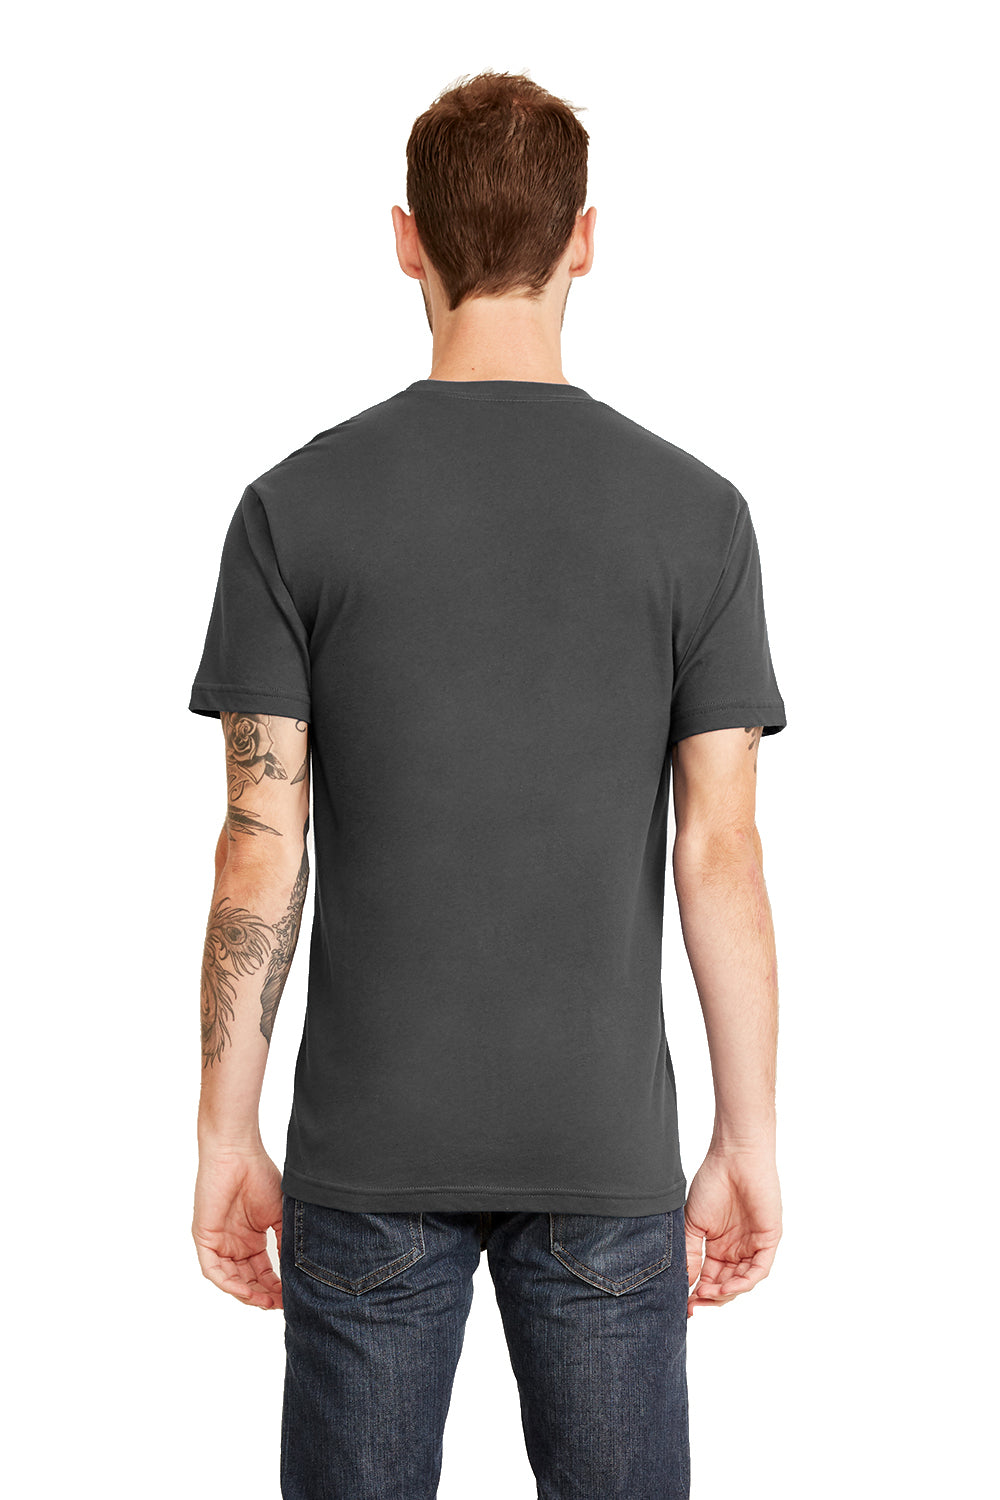 Next Level 3605 Mens Fine Jersey Short Sleeve Crewneck T-Shirt w/ Pocket Heavy Metal Grey Back